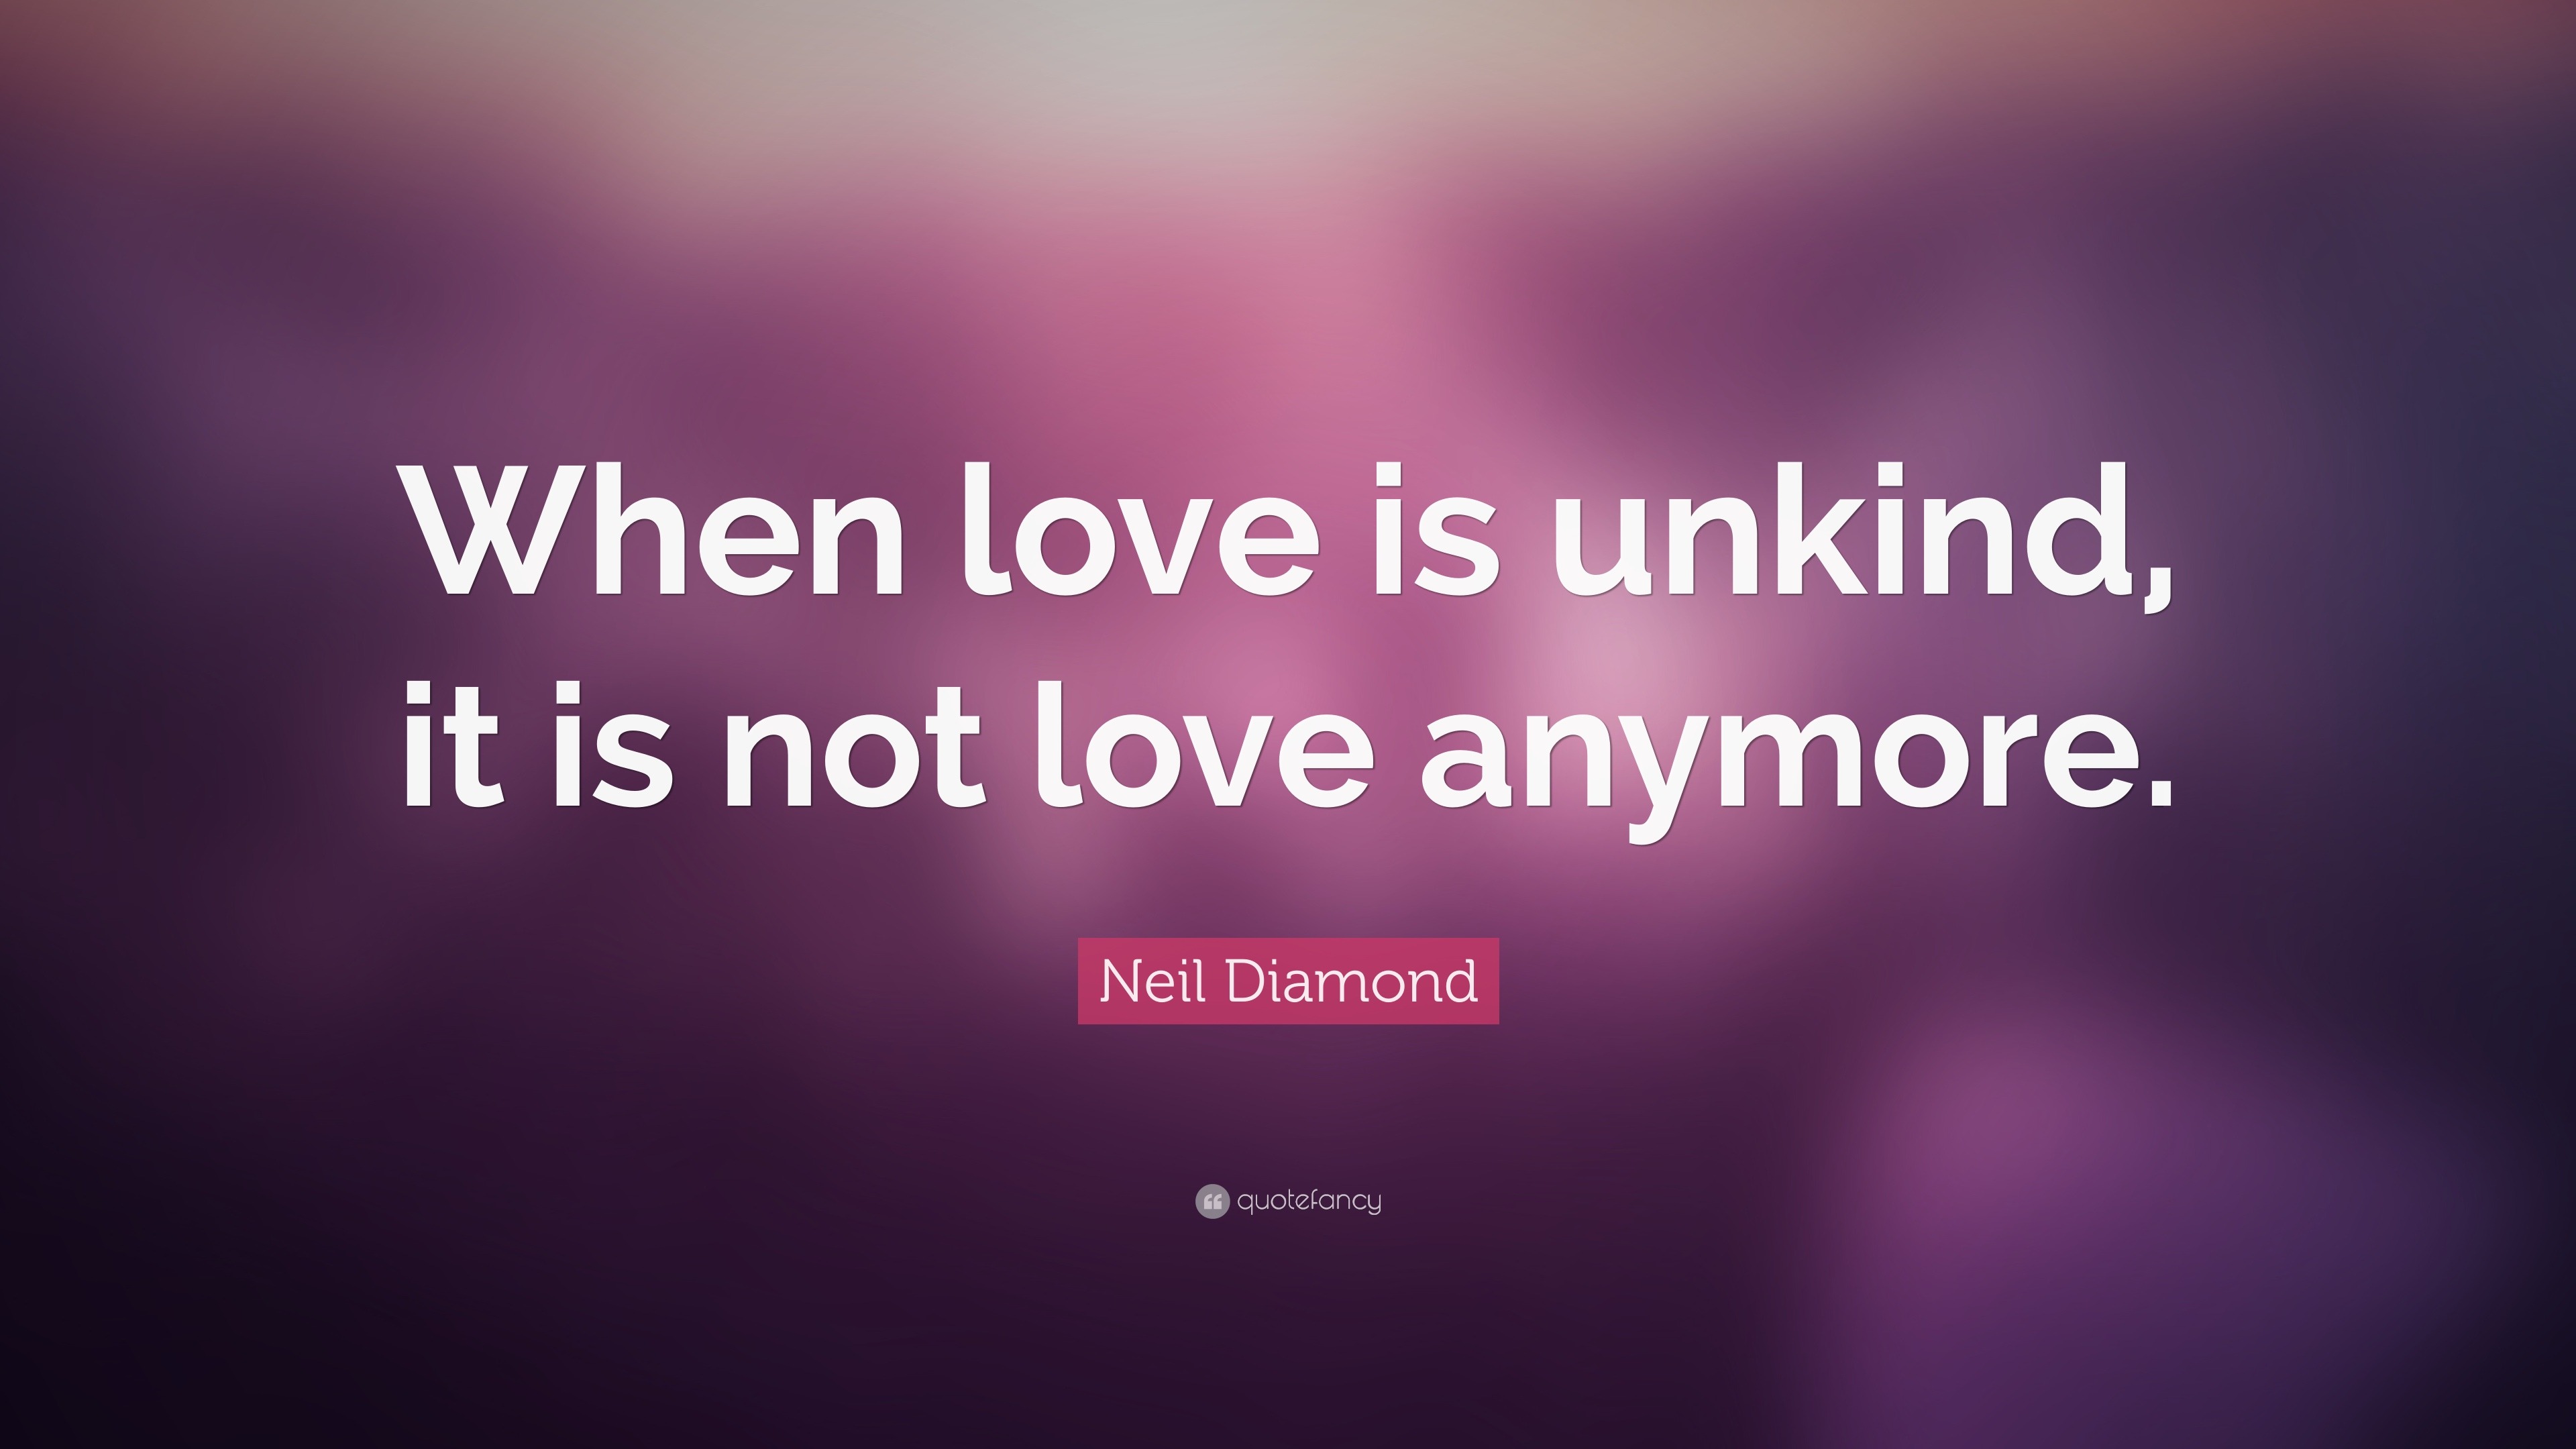 Neil Diamond Quotes (100 wallpapers) - Quotefancy